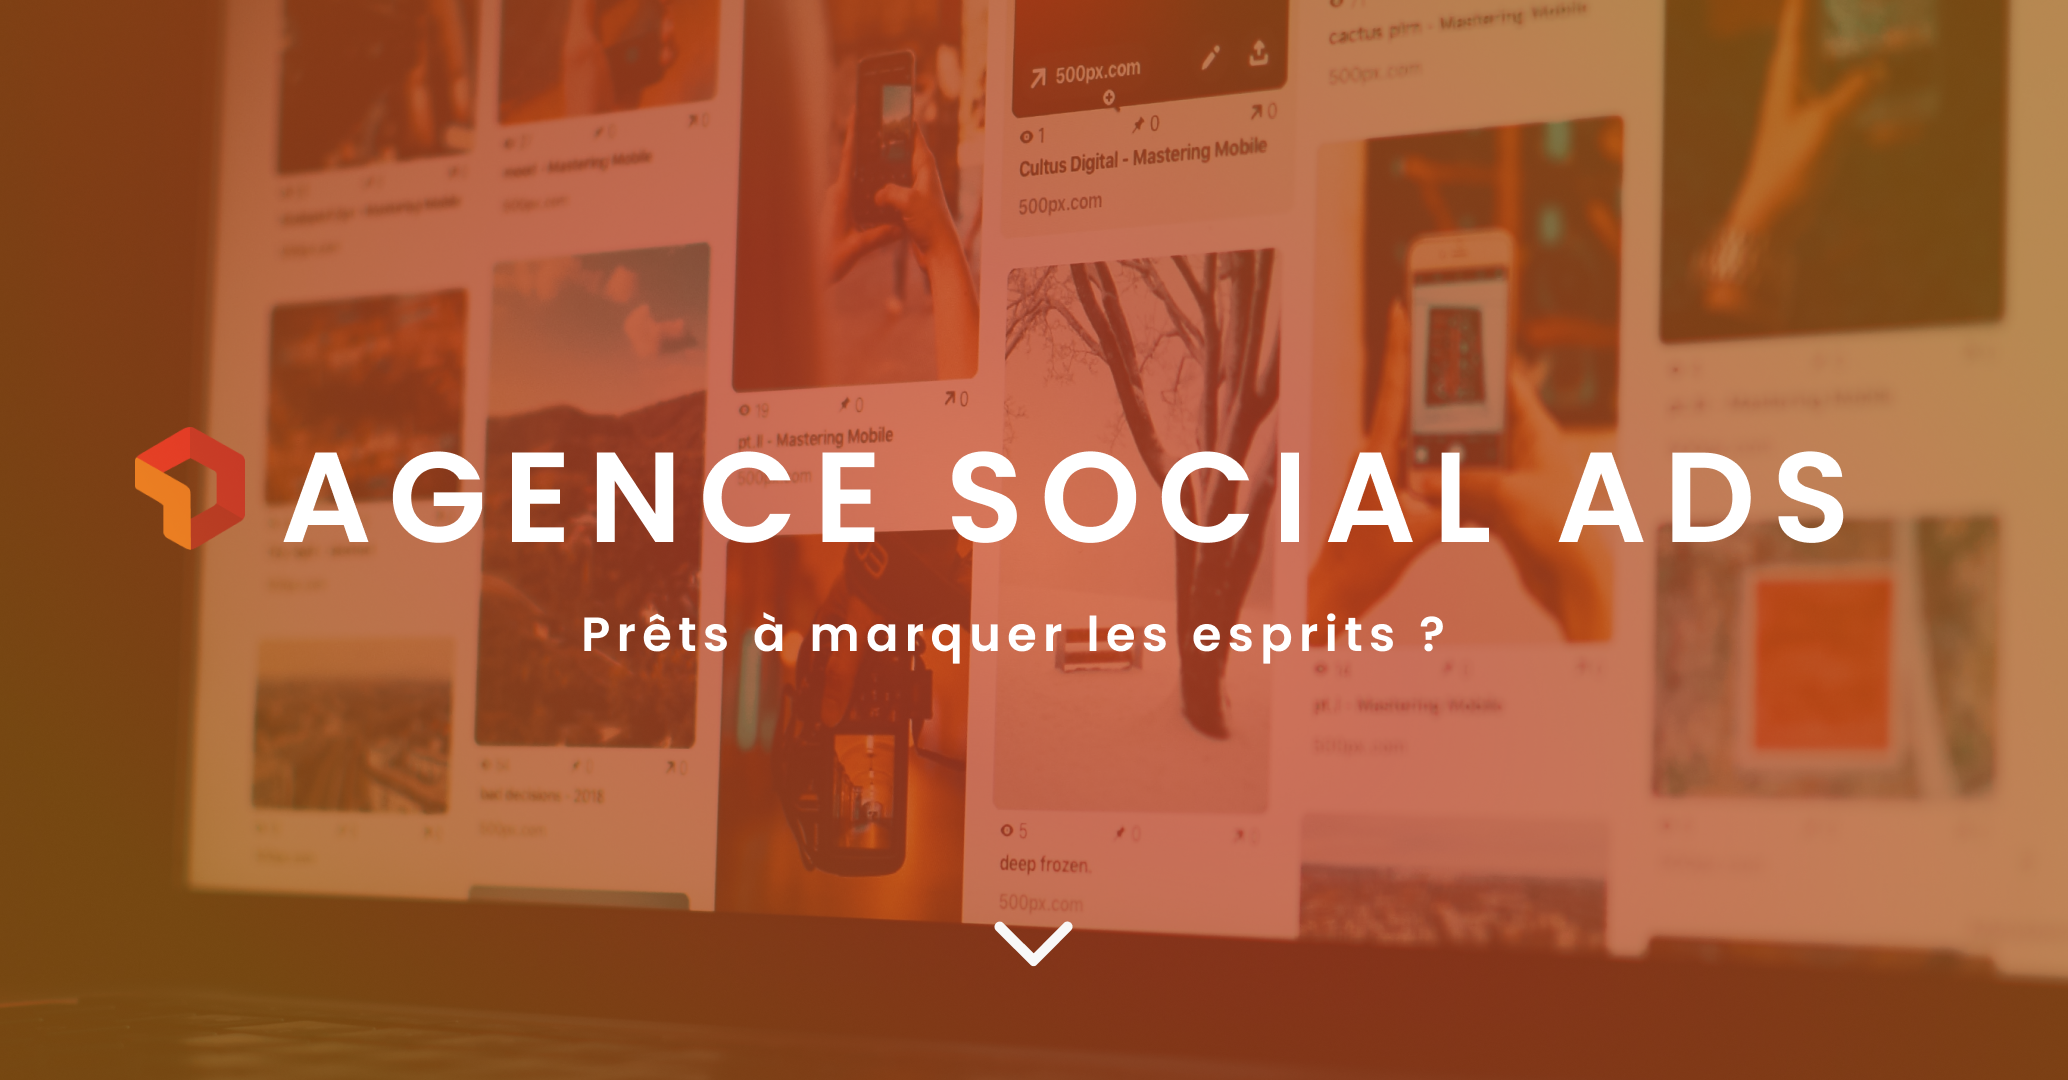 Agence Social Ads à Paris (1)